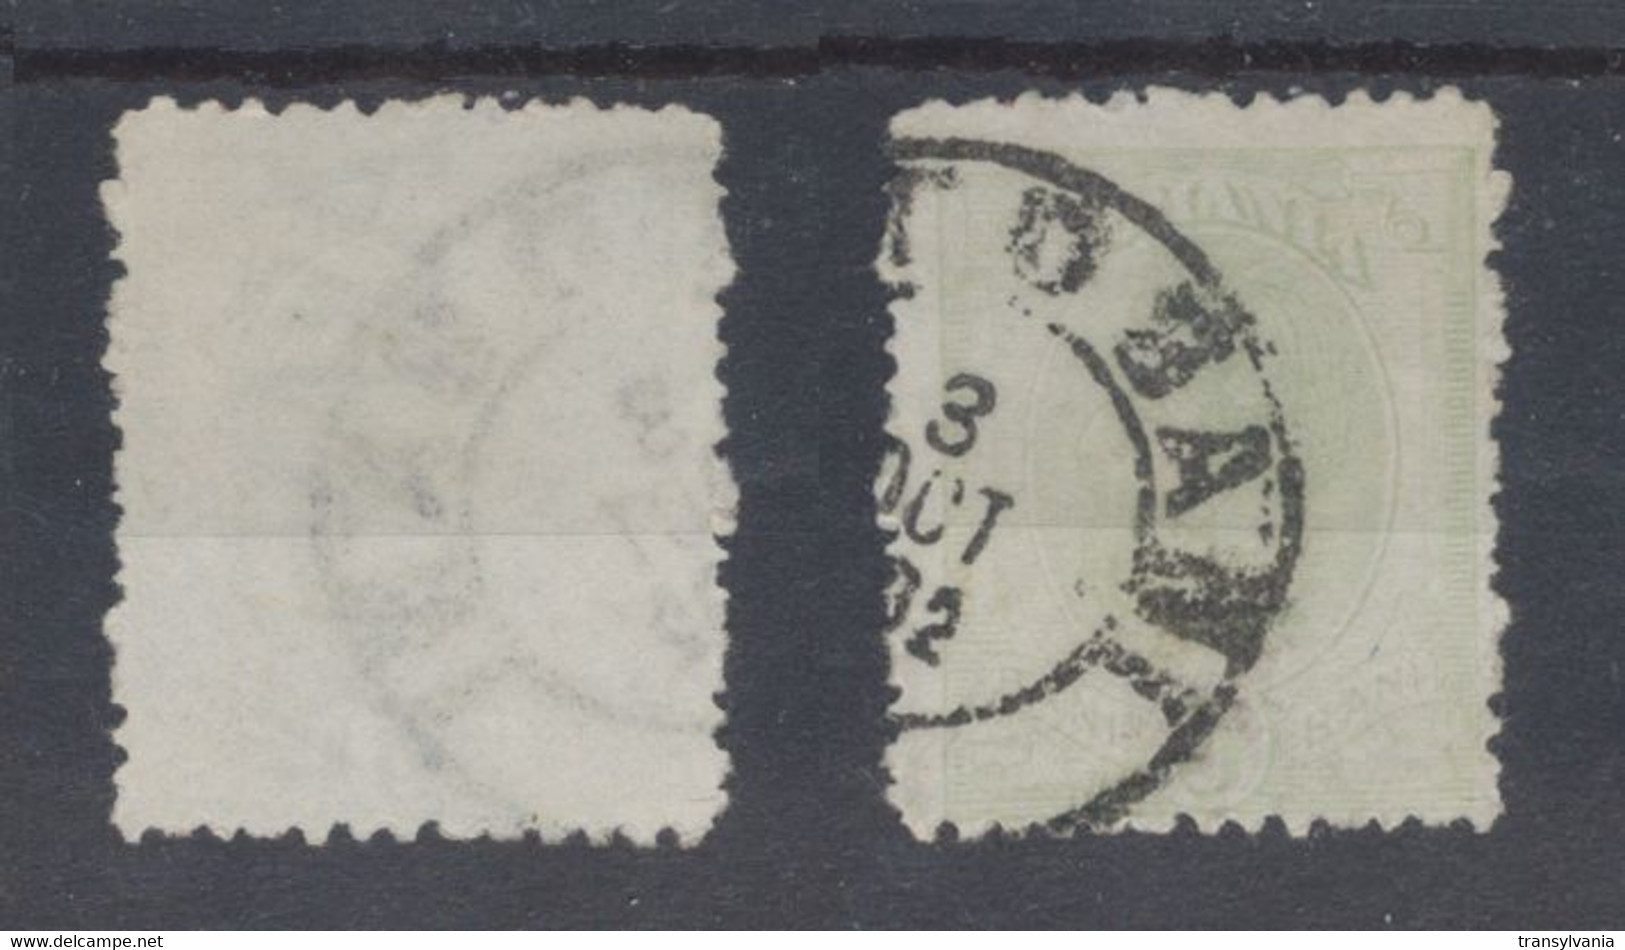 Romania 1900 Wheat Ear Issue 5 Bani Used Stamp With Scarce JOHANNOT Watermark - Errors, Freaks & Oddities (EFO)